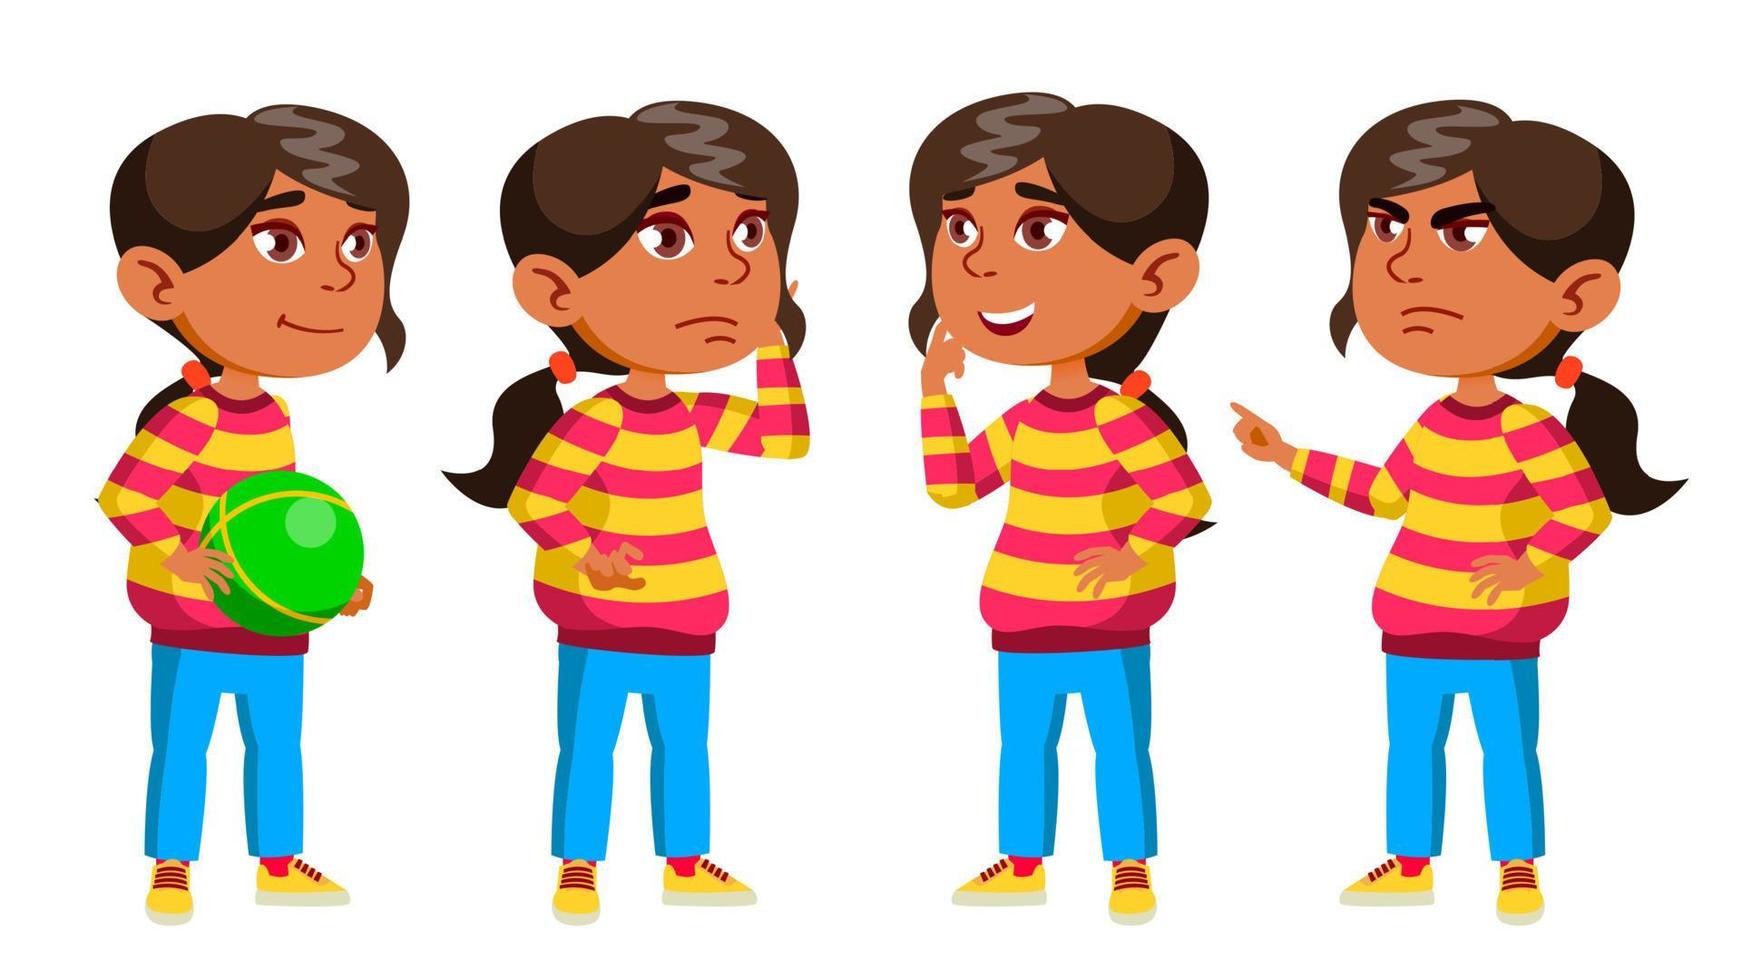 Arab, Muslim Girl Kindergarten Kid Poses Set Vector. Preschool. Young Person. Cheerful. For Web, Brochure, Poster Design. Isolated Cartoon Illustration vector